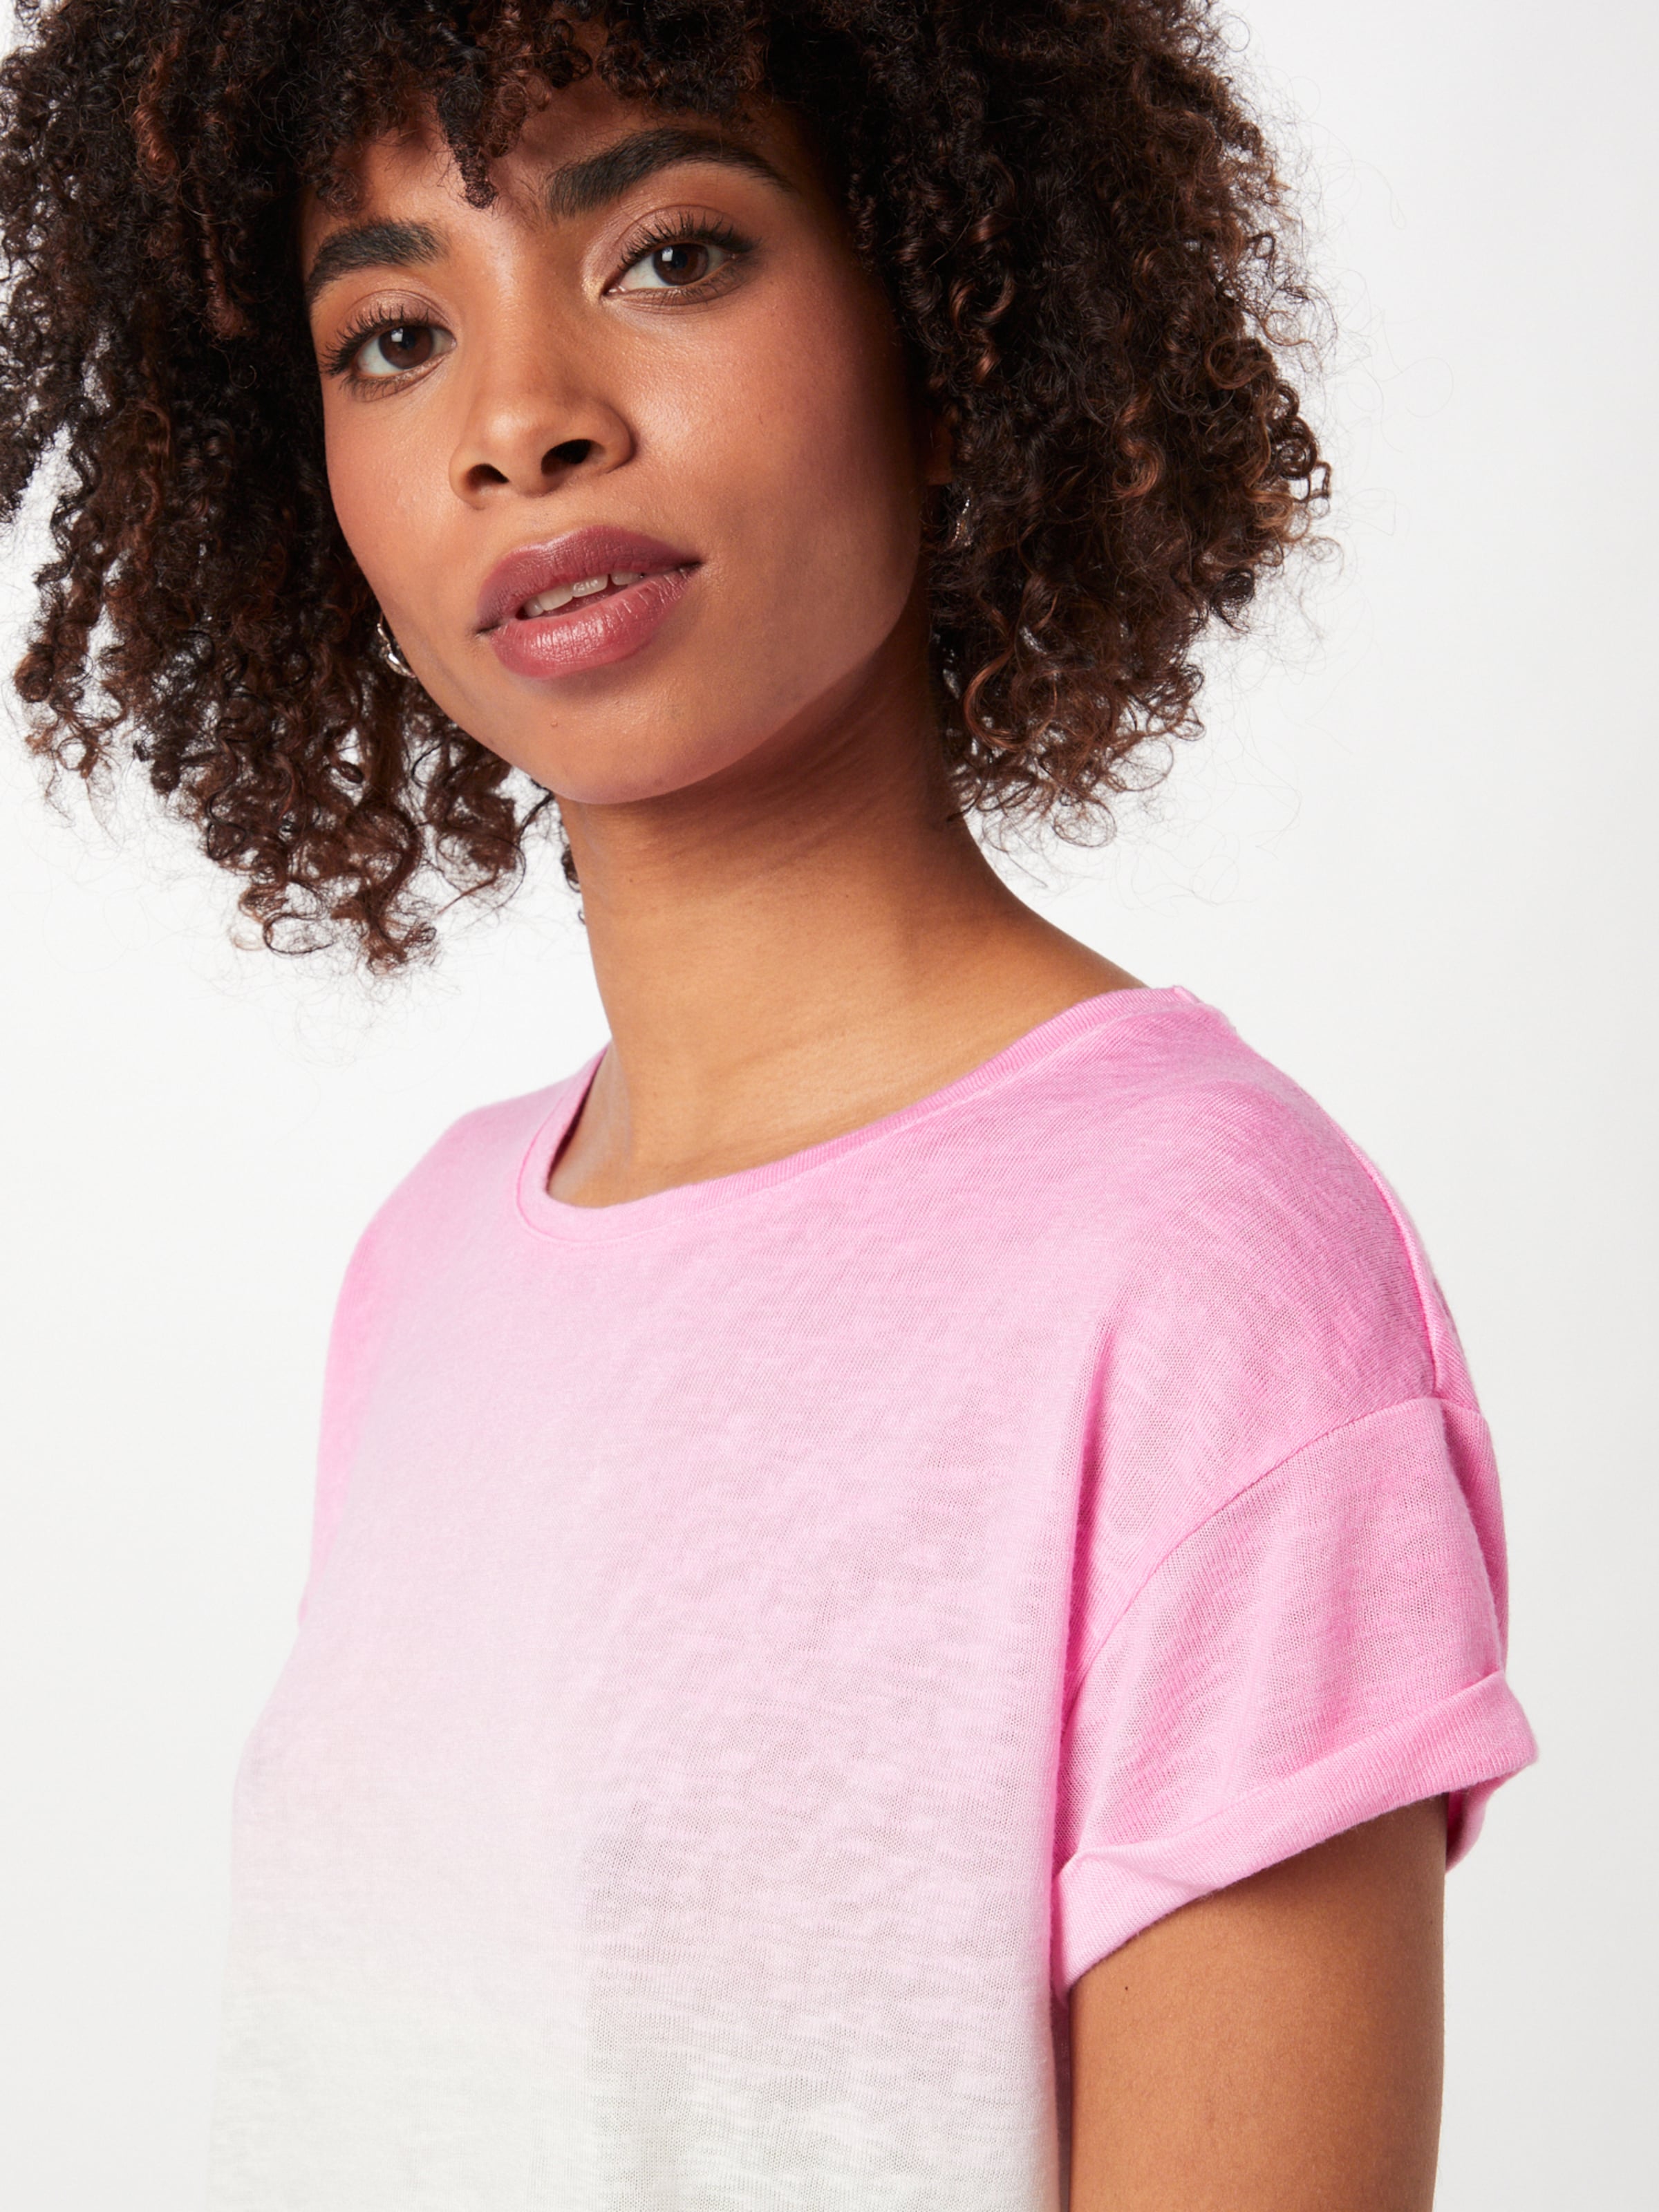 Frauen Shirts & Tops Mavi T-Shirt in Mischfarben - UJ11307